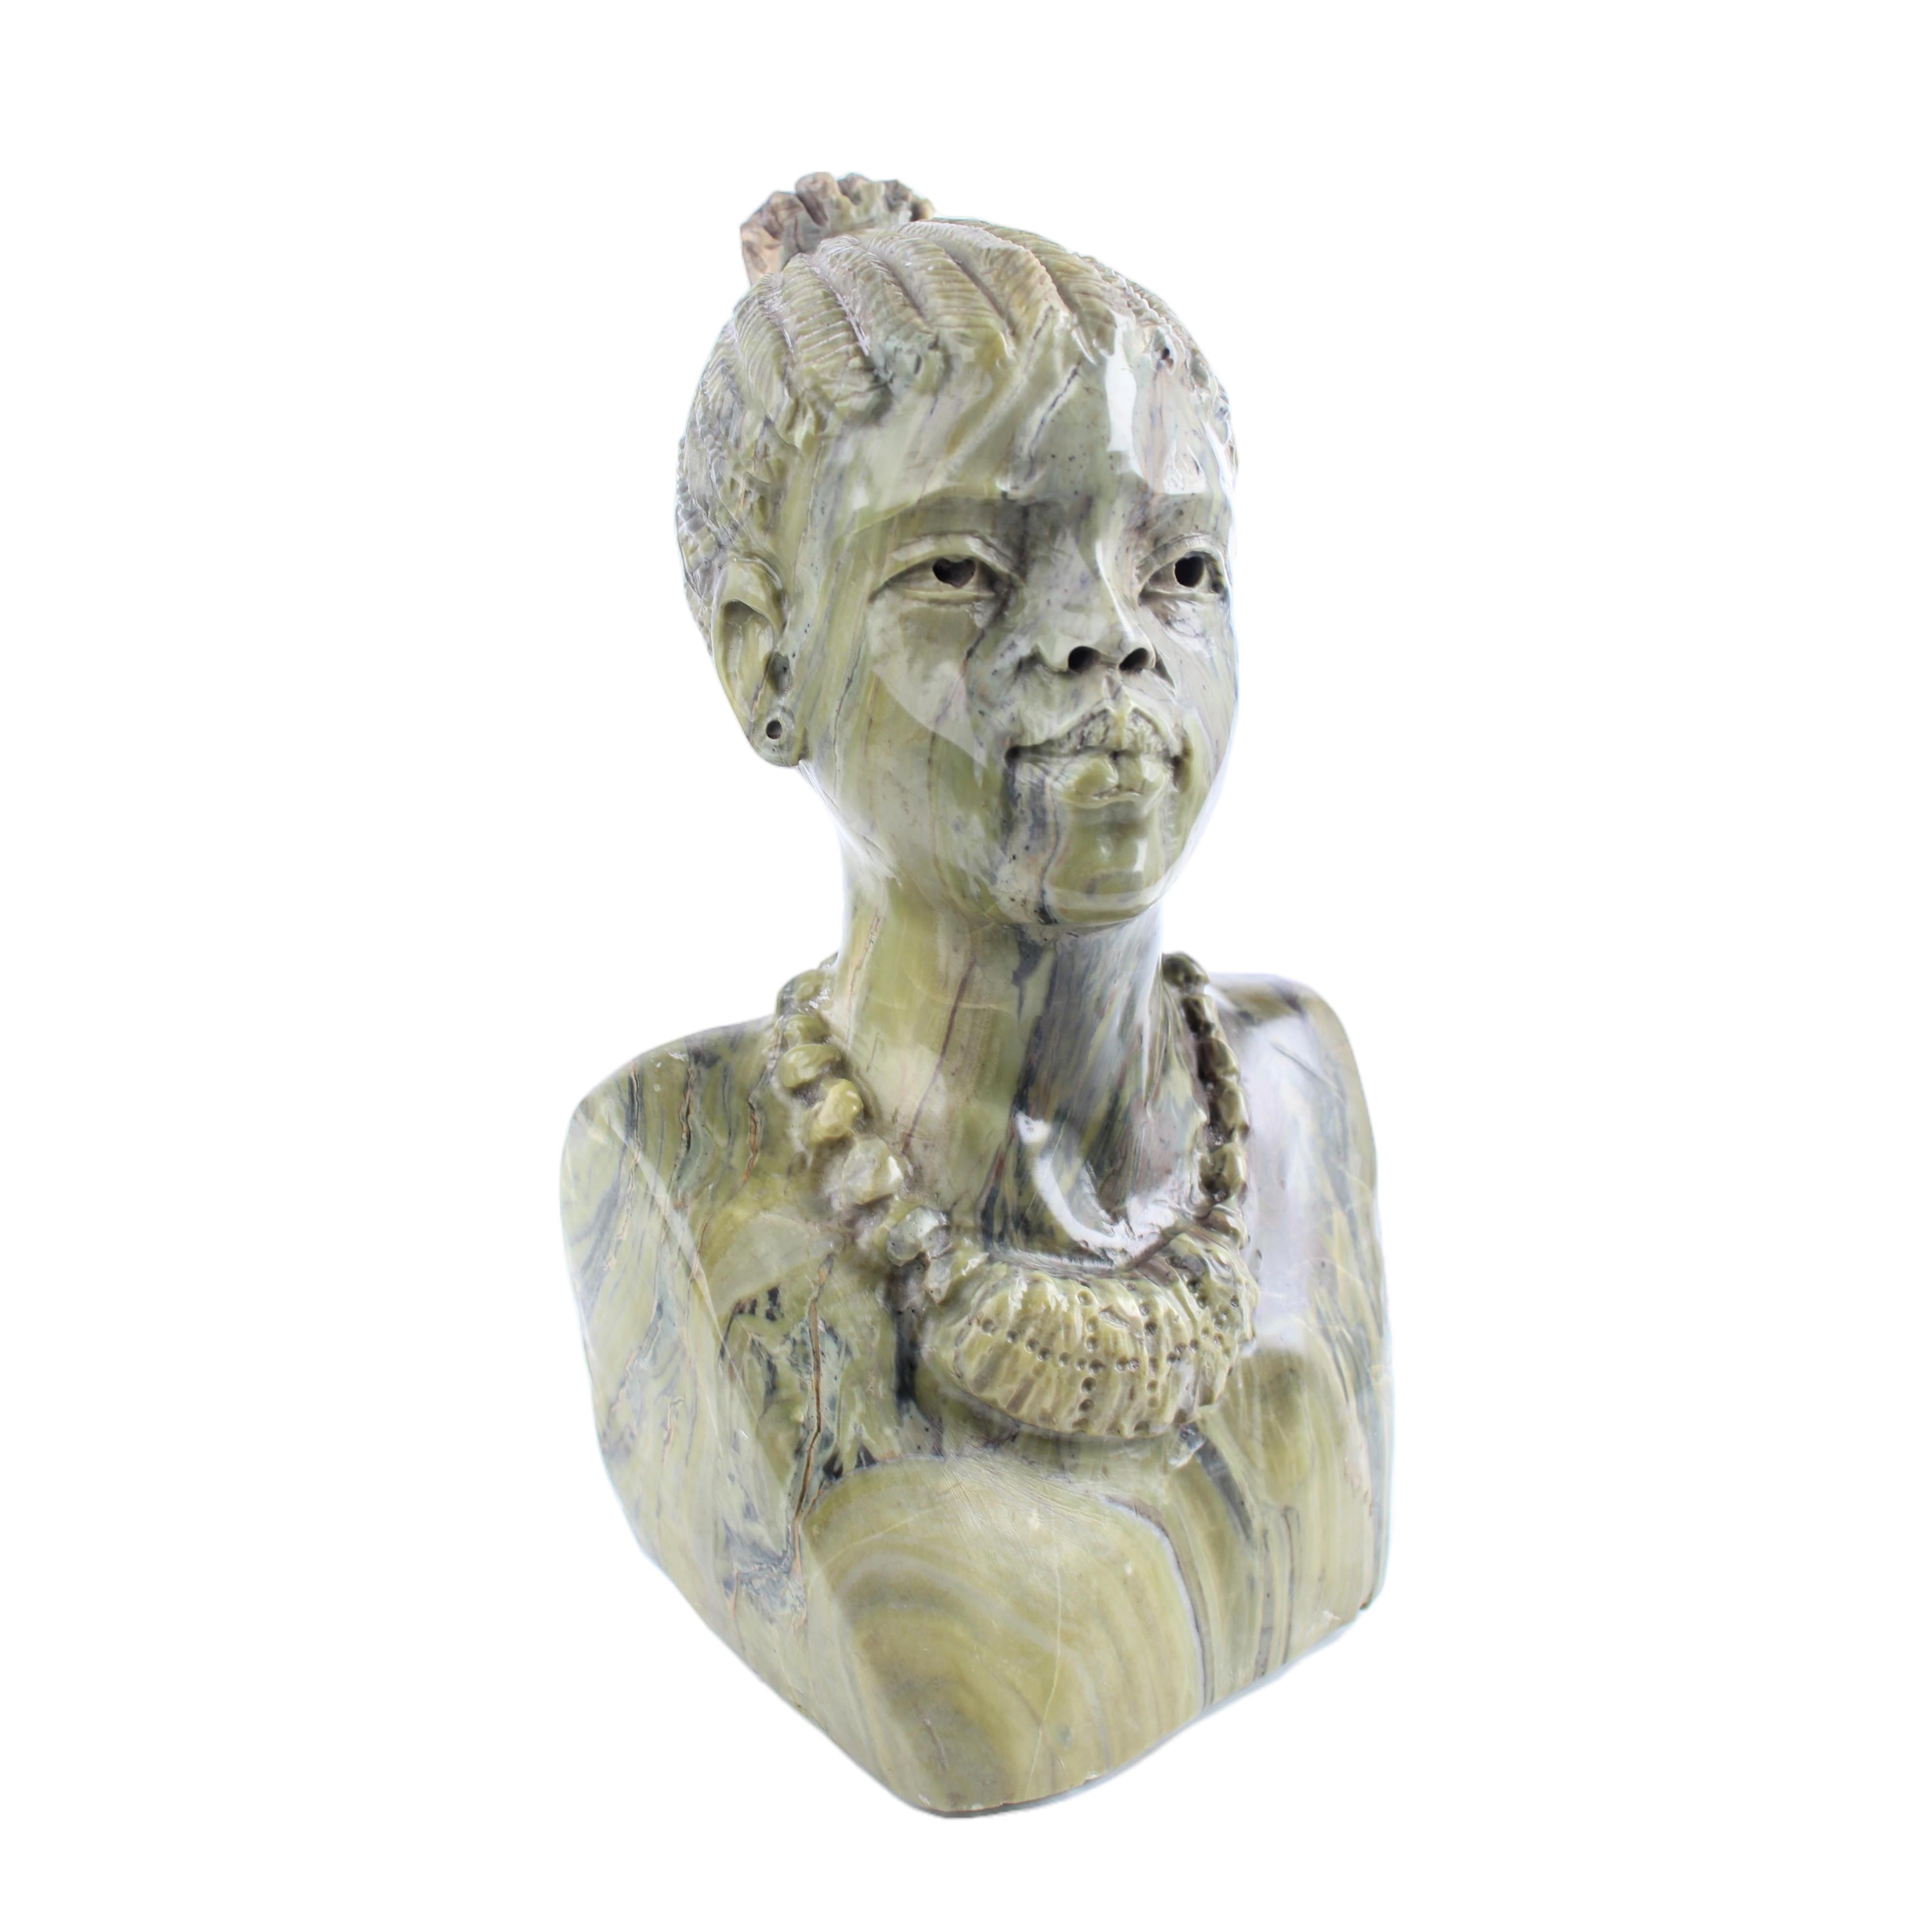 Shona Tribe Verdite Stone Busts ~11.4" Tall - Busts